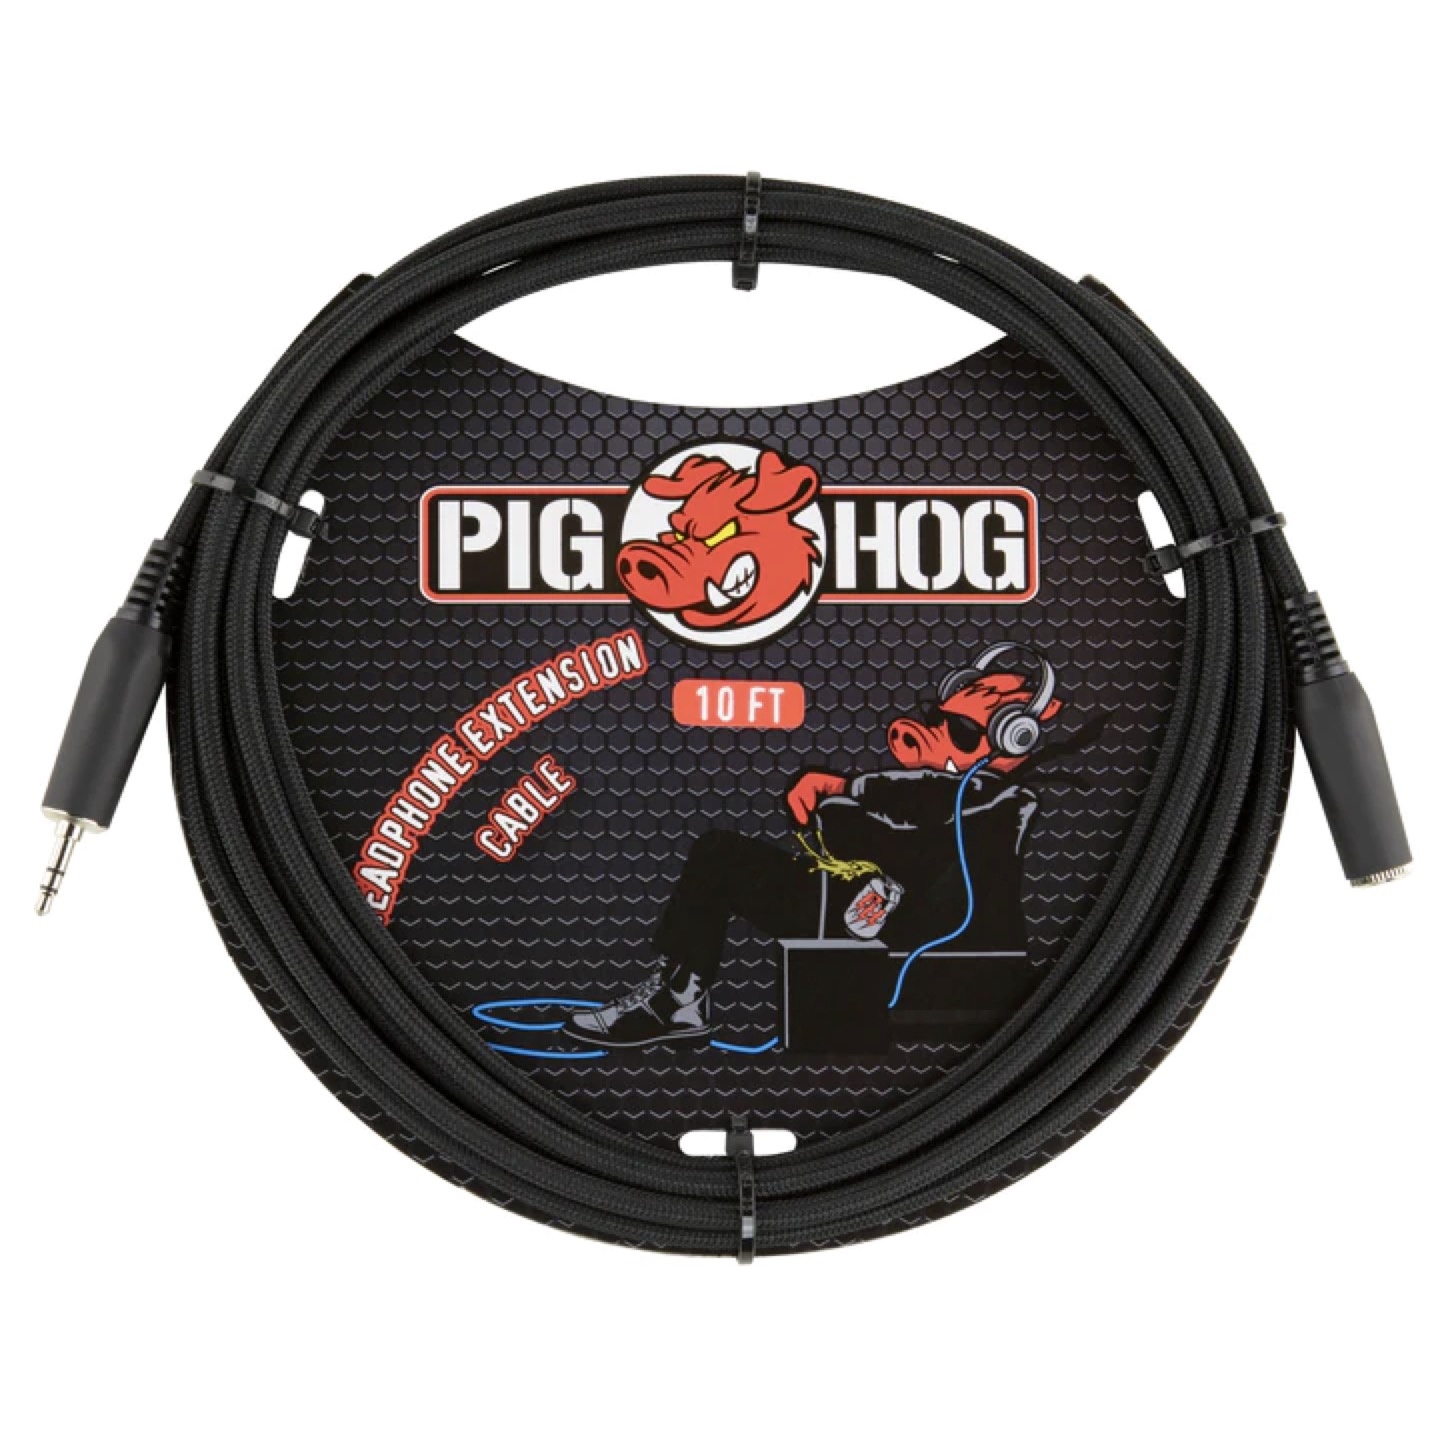 Pig Hog 10ft Headphone Extension Cable, 3.5mm, Black